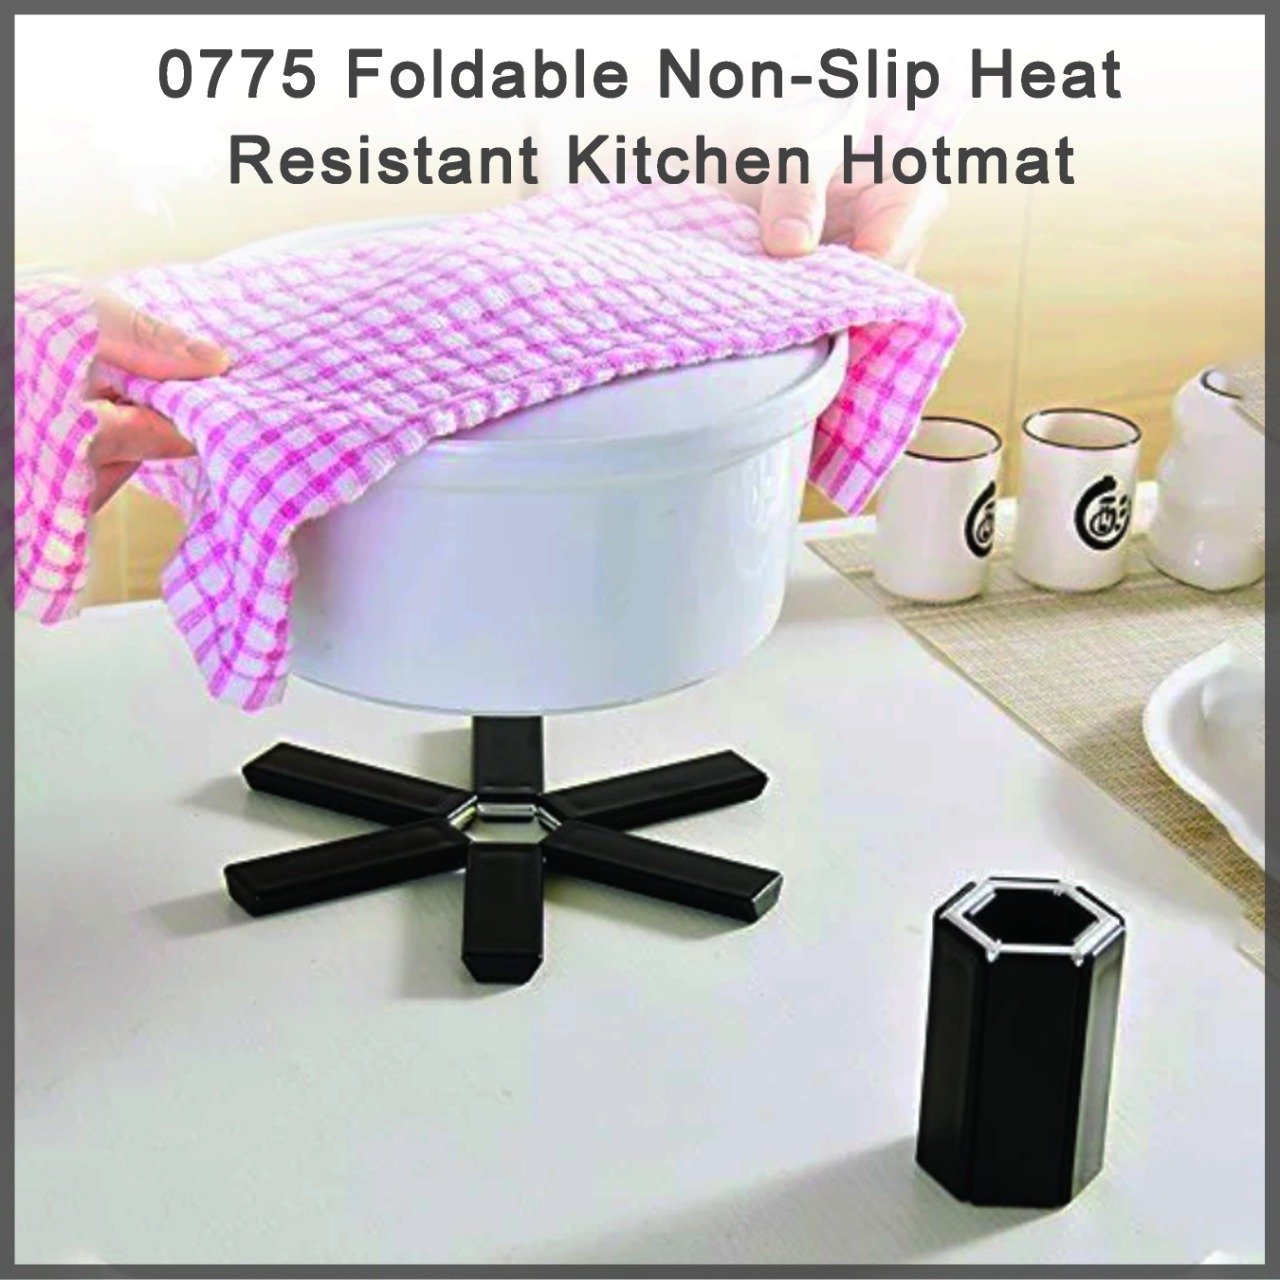 0775 Foldable Non-Slip Heat Resistant Kitchen Hotmat - SkyShopy